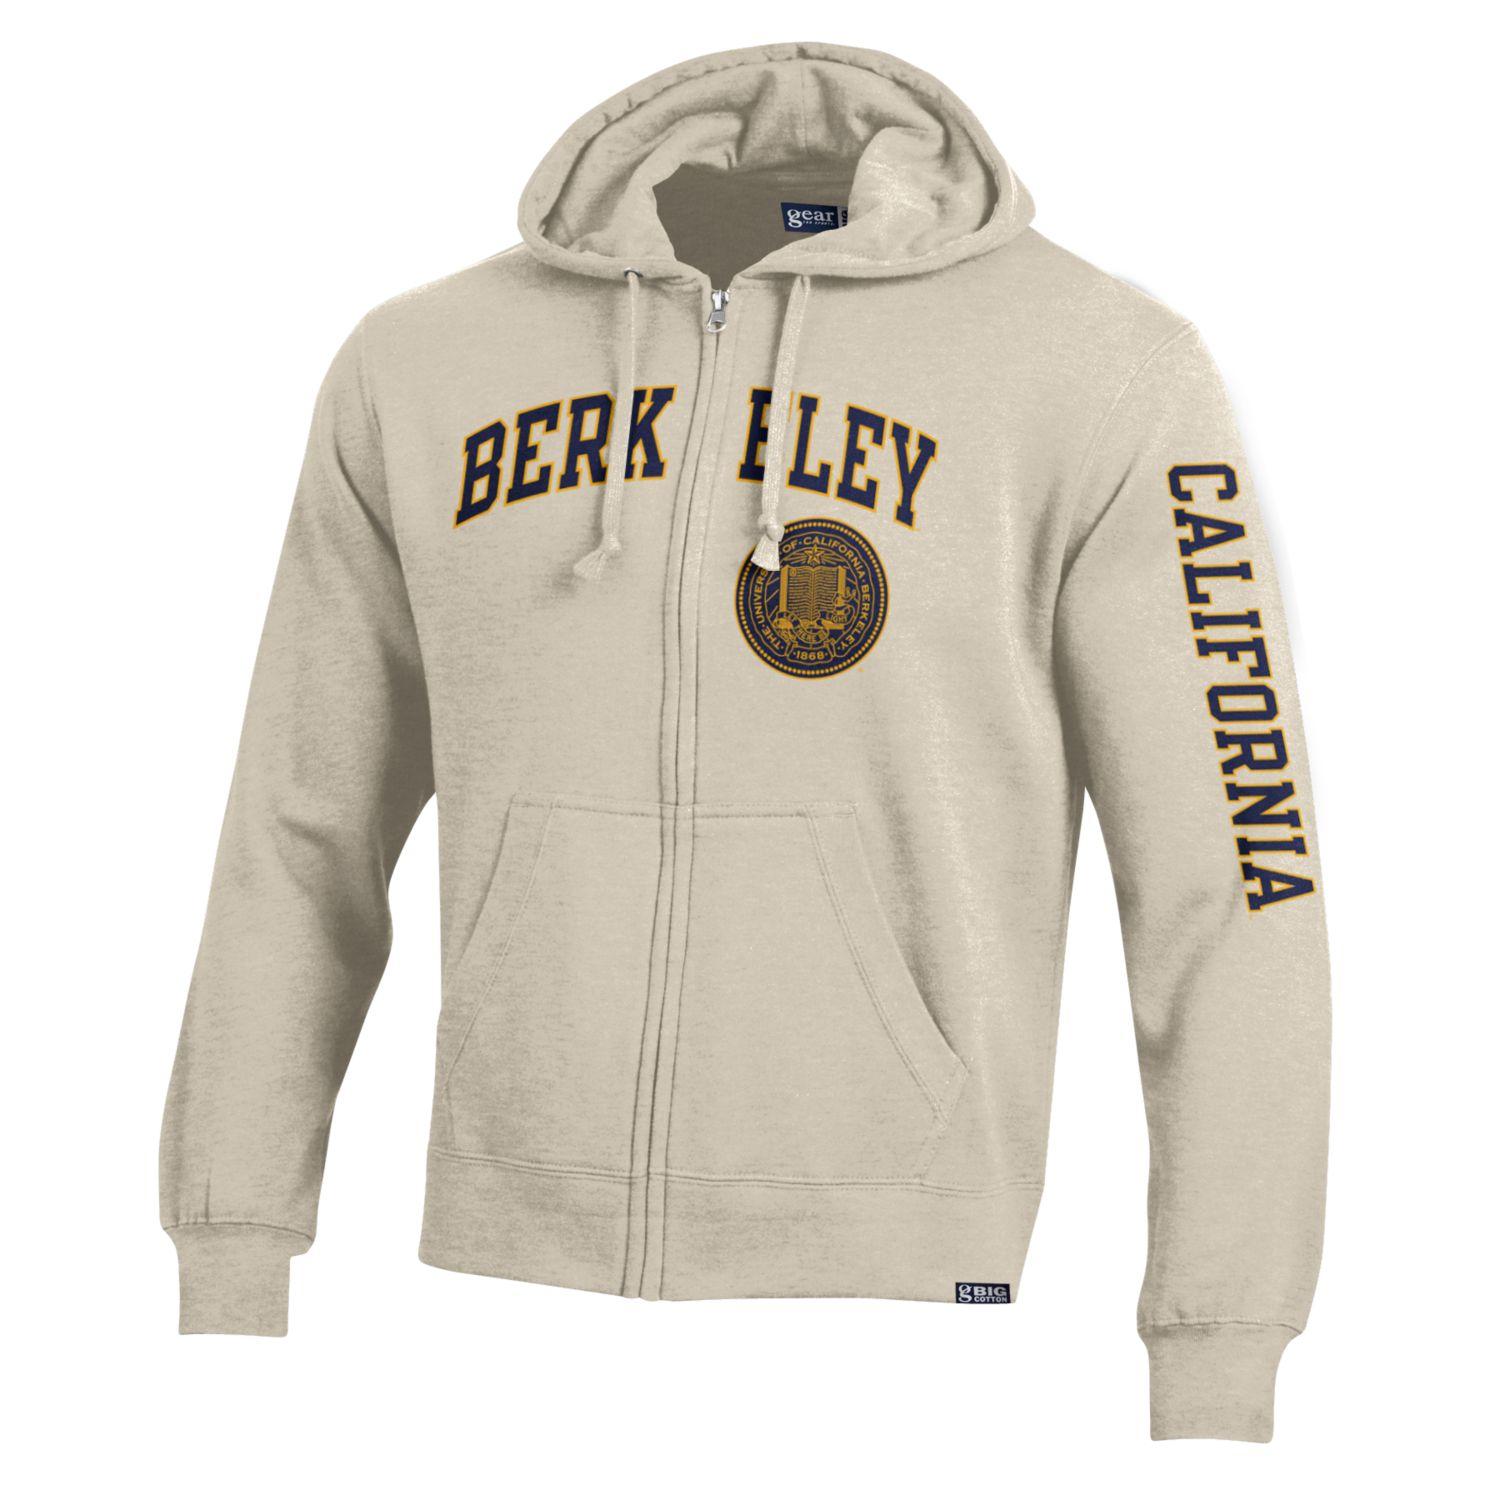 U.C. Berkeley arch & seal with California on the sleeve rich Cotton Zip-Up hoodie sweatshirt-oatmeal-Shop College Wear